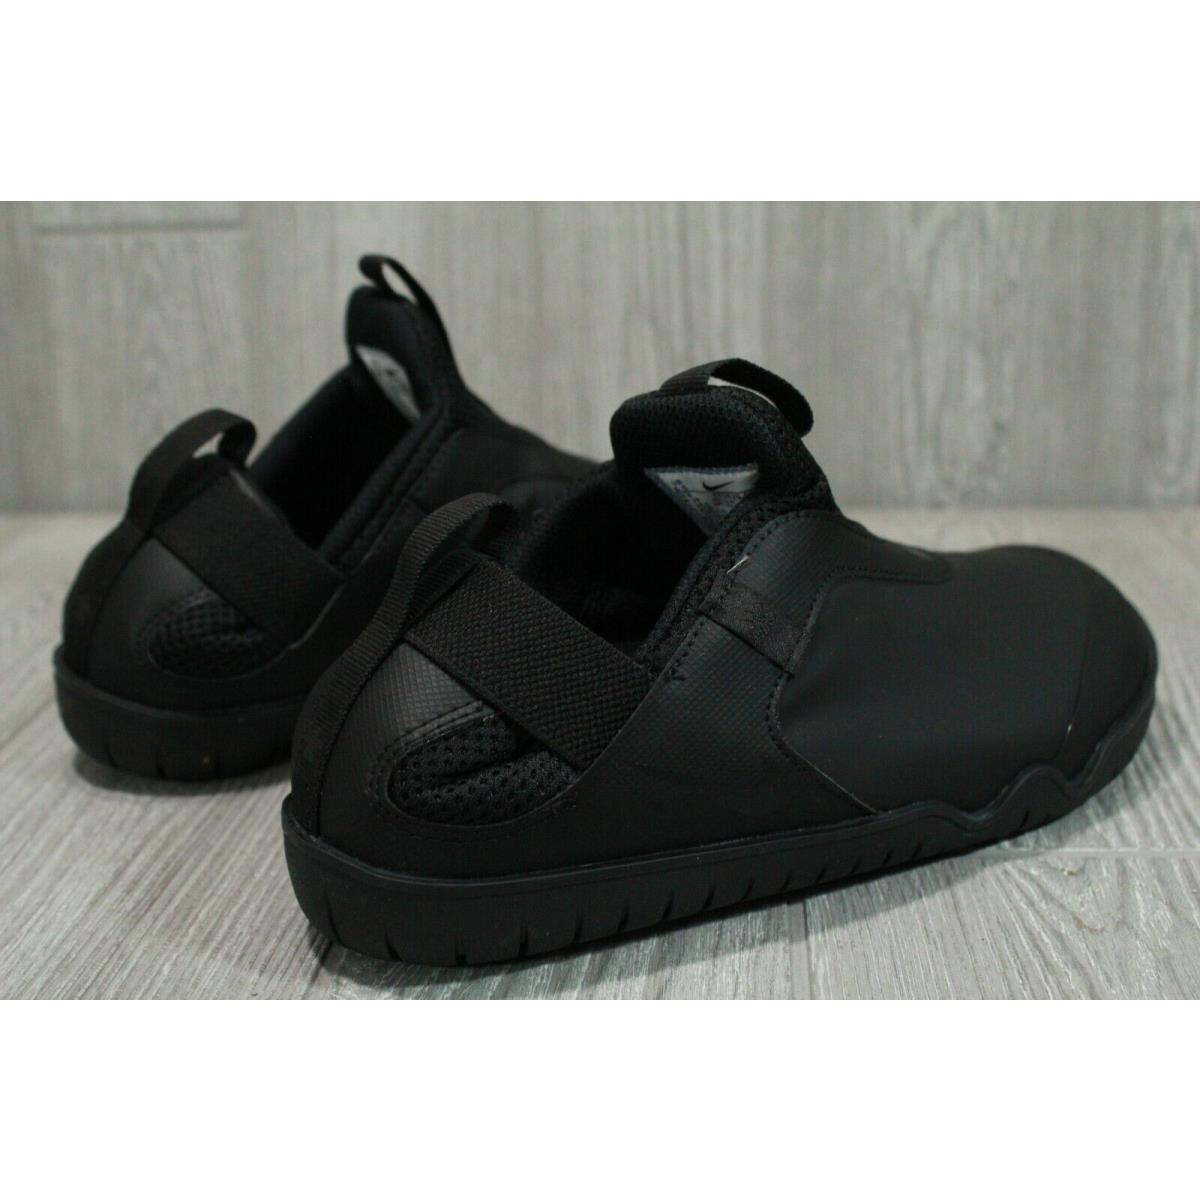 Nike shoes Zoom Pulse - Black 2